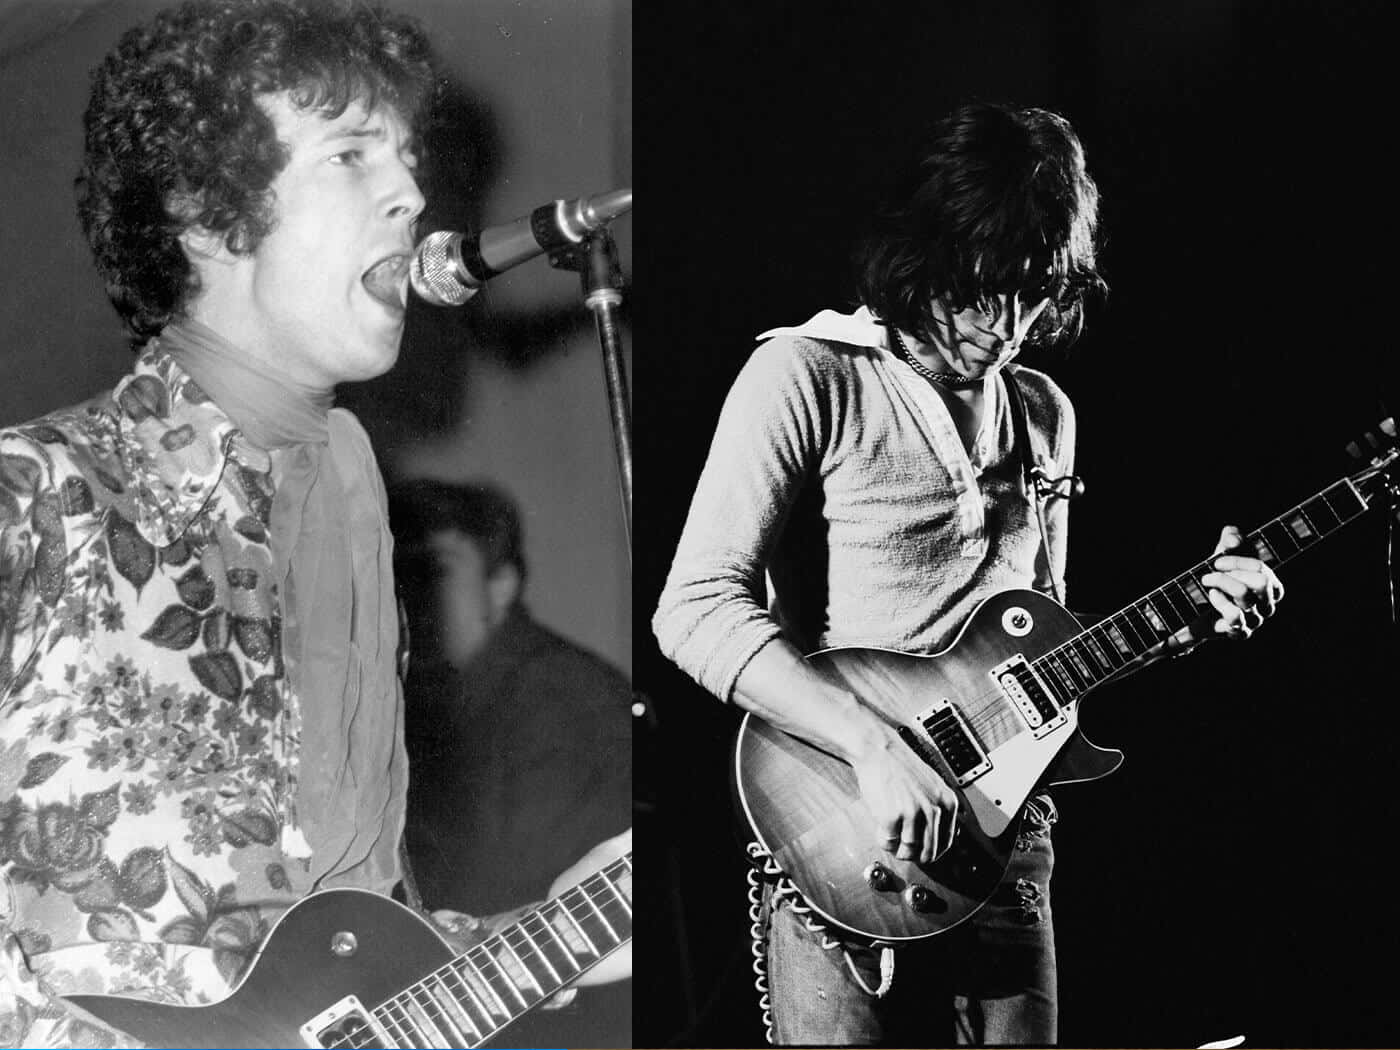 Yardbirdseric Clapton Och Jeff Beck. Wallpaper